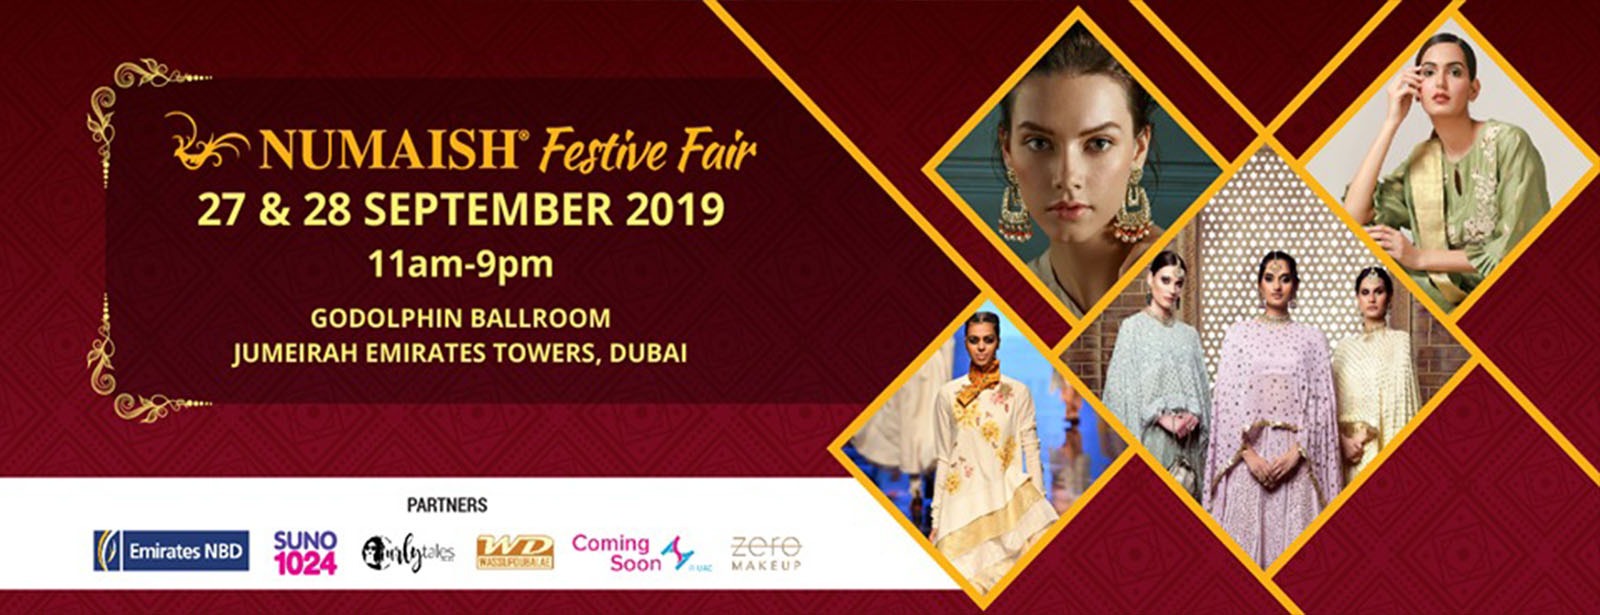 Numaish Festive Fair 2019 - Coming Soon in UAE